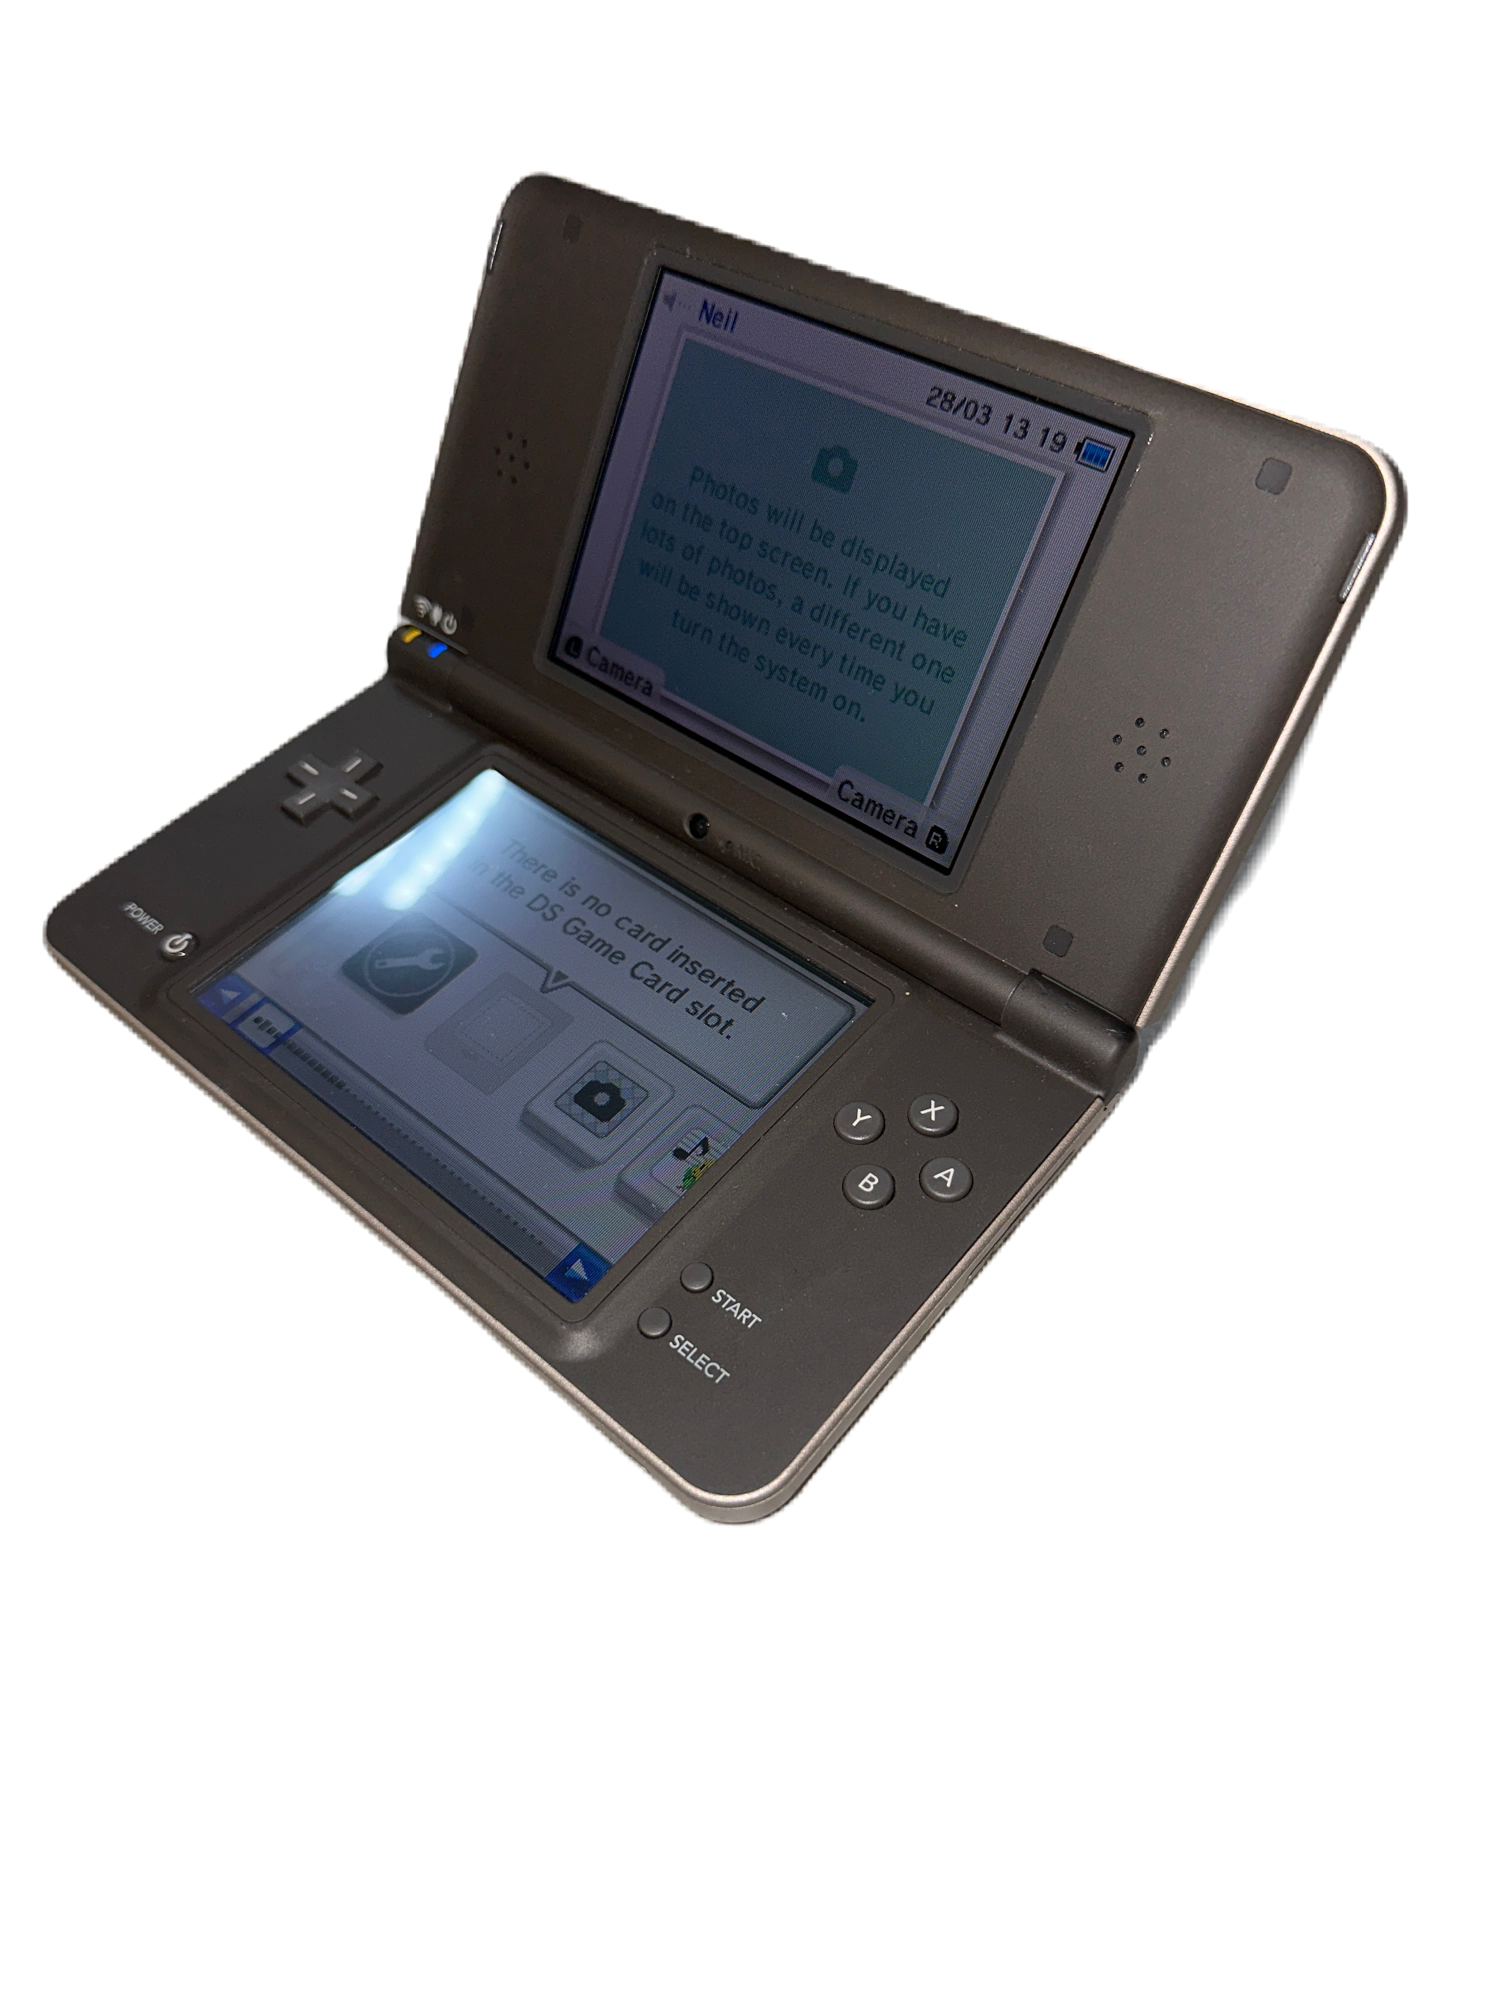 Nintendo DSi XL - Brown - Charge Lead